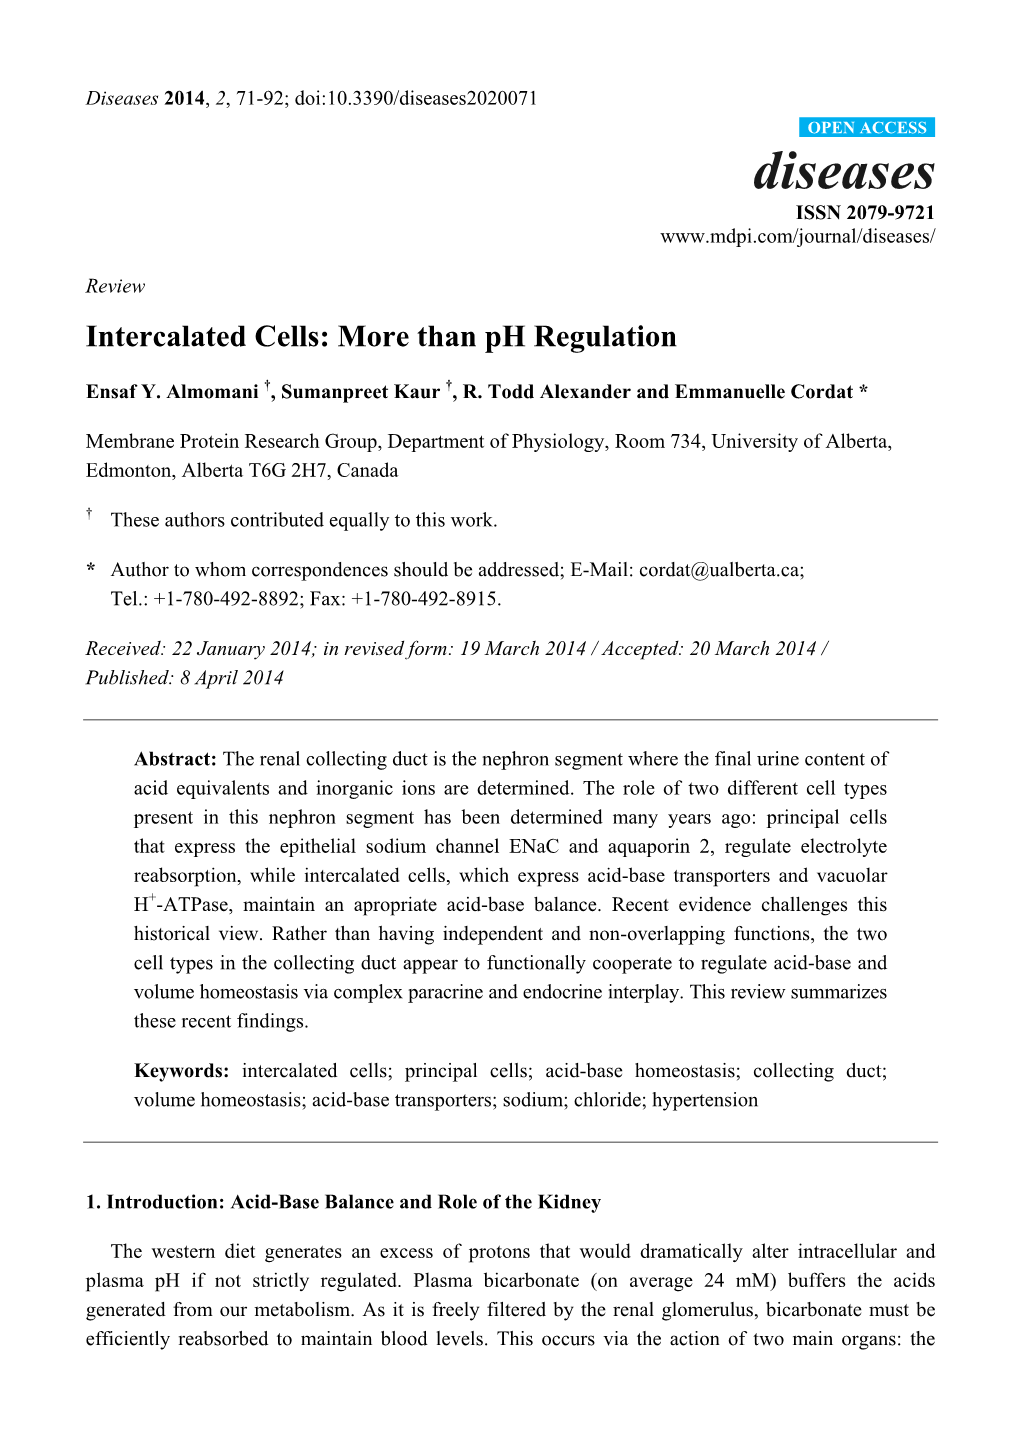 Intercalated Cells: More Than Ph Regulation